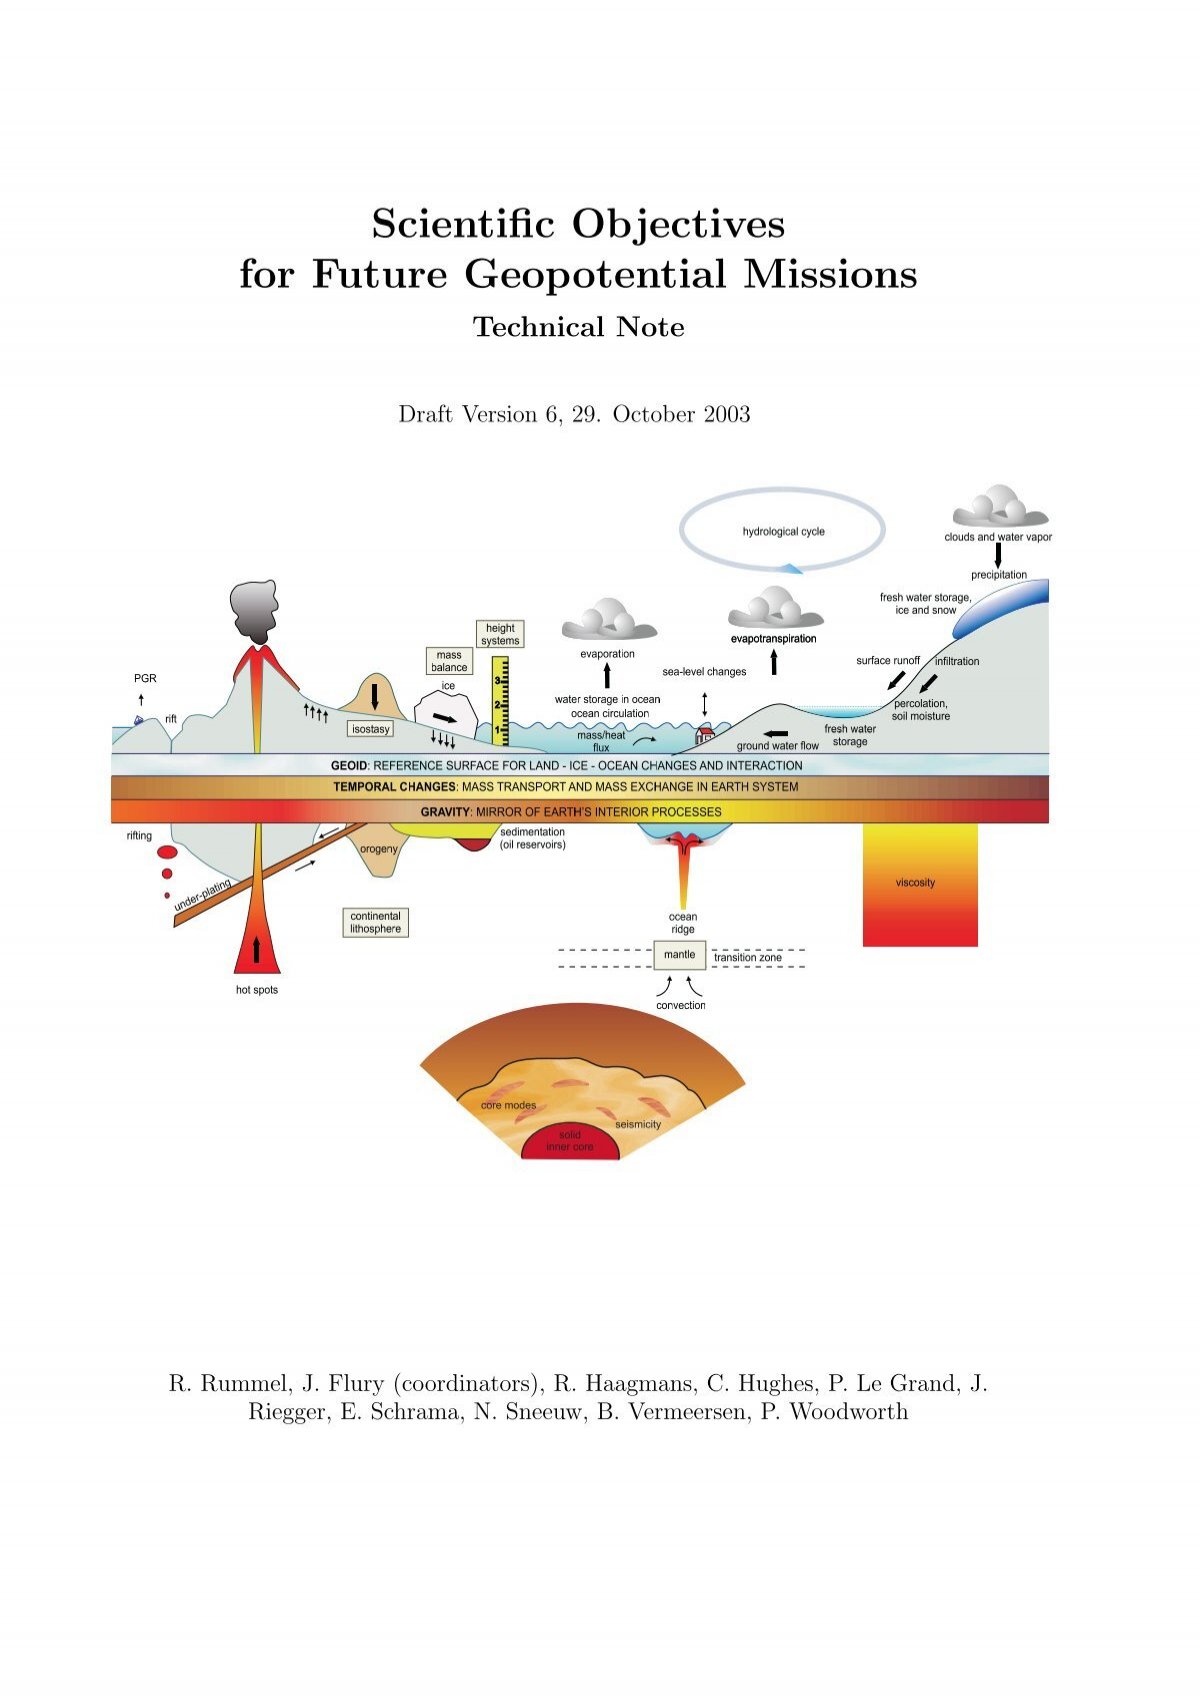 ESSD - Description of the multi-approach gravity field models from